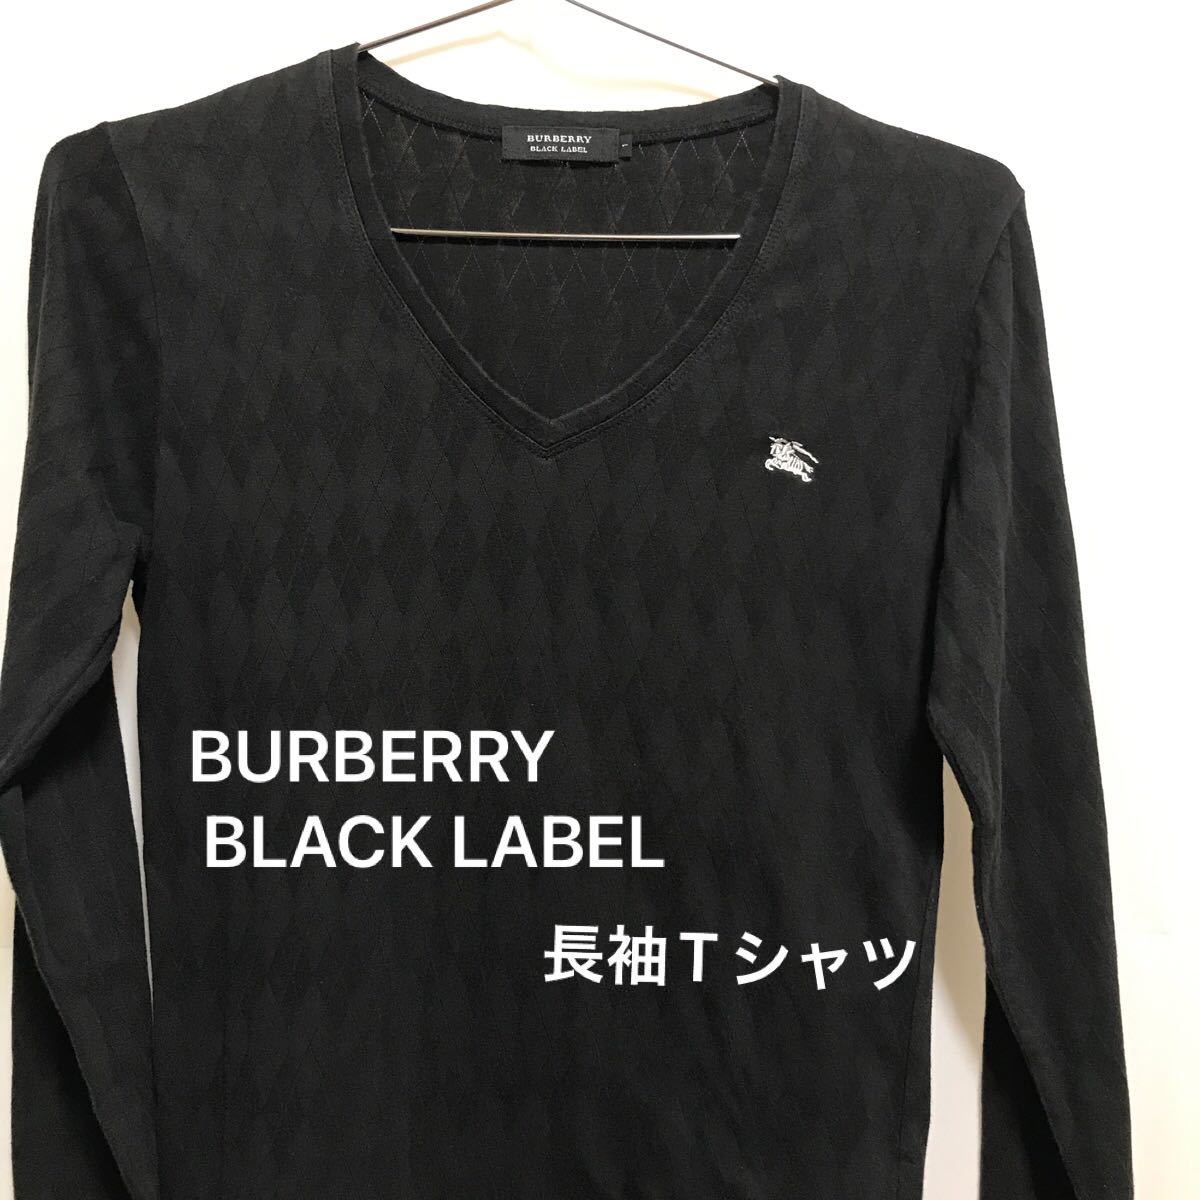 Burberry Black Label 長袖Tシャツ Vネック S - Tシャツ